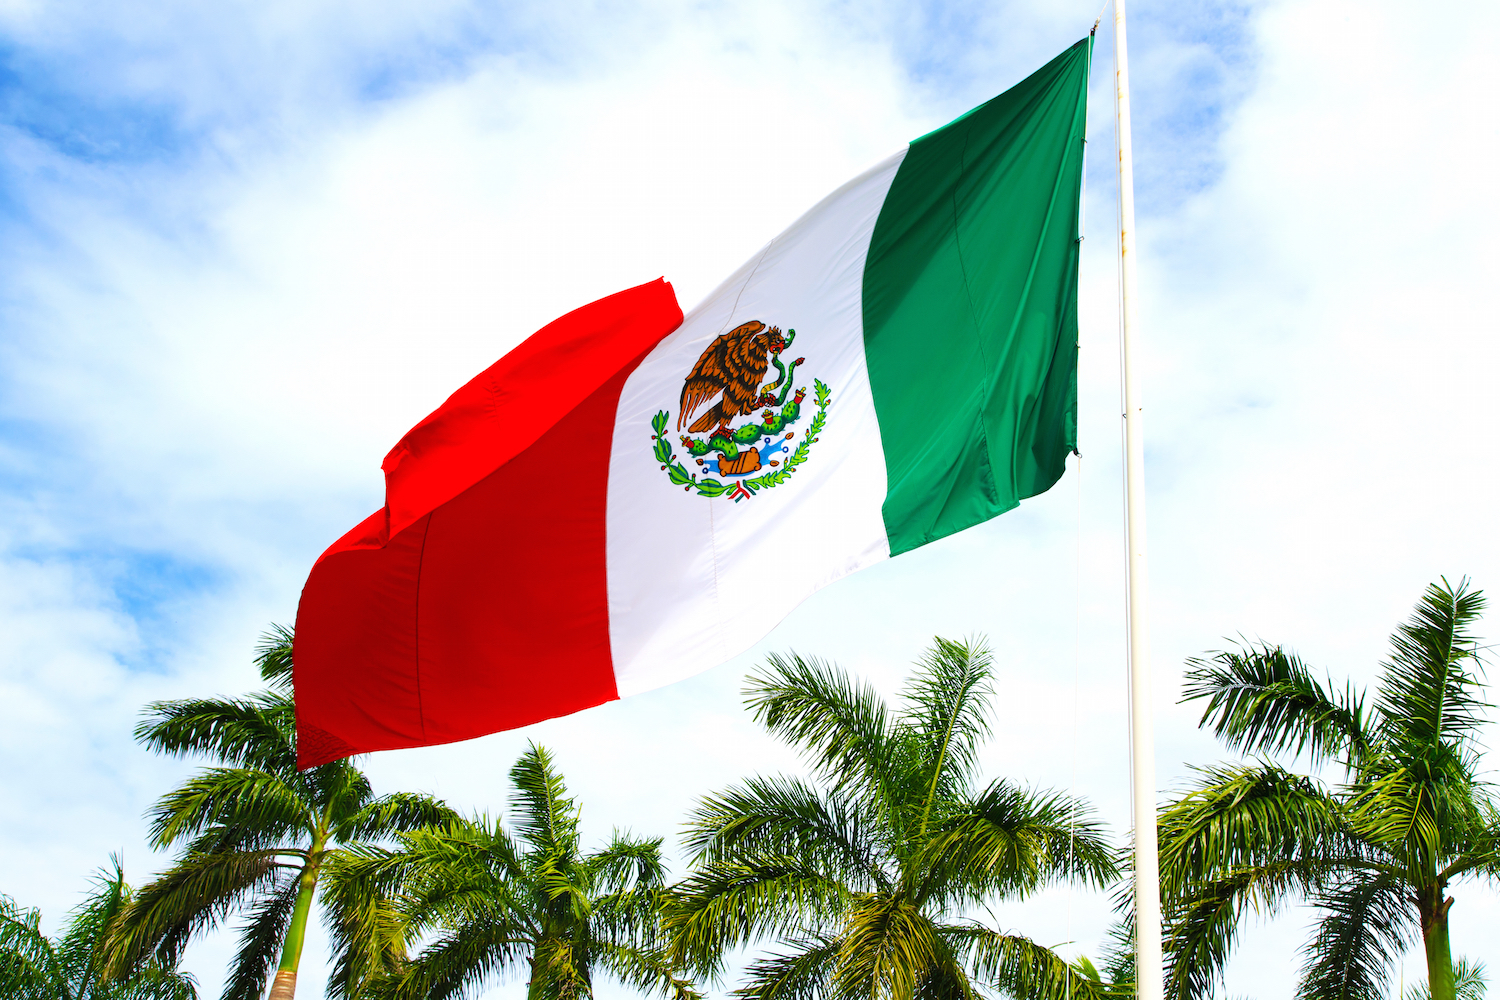 KJW737HOG5BRFBKKACABCVEKFE - دولت مکزیک در نظر دارد تا سال 2024 یک ارزدیجیتال ملی صادر کند